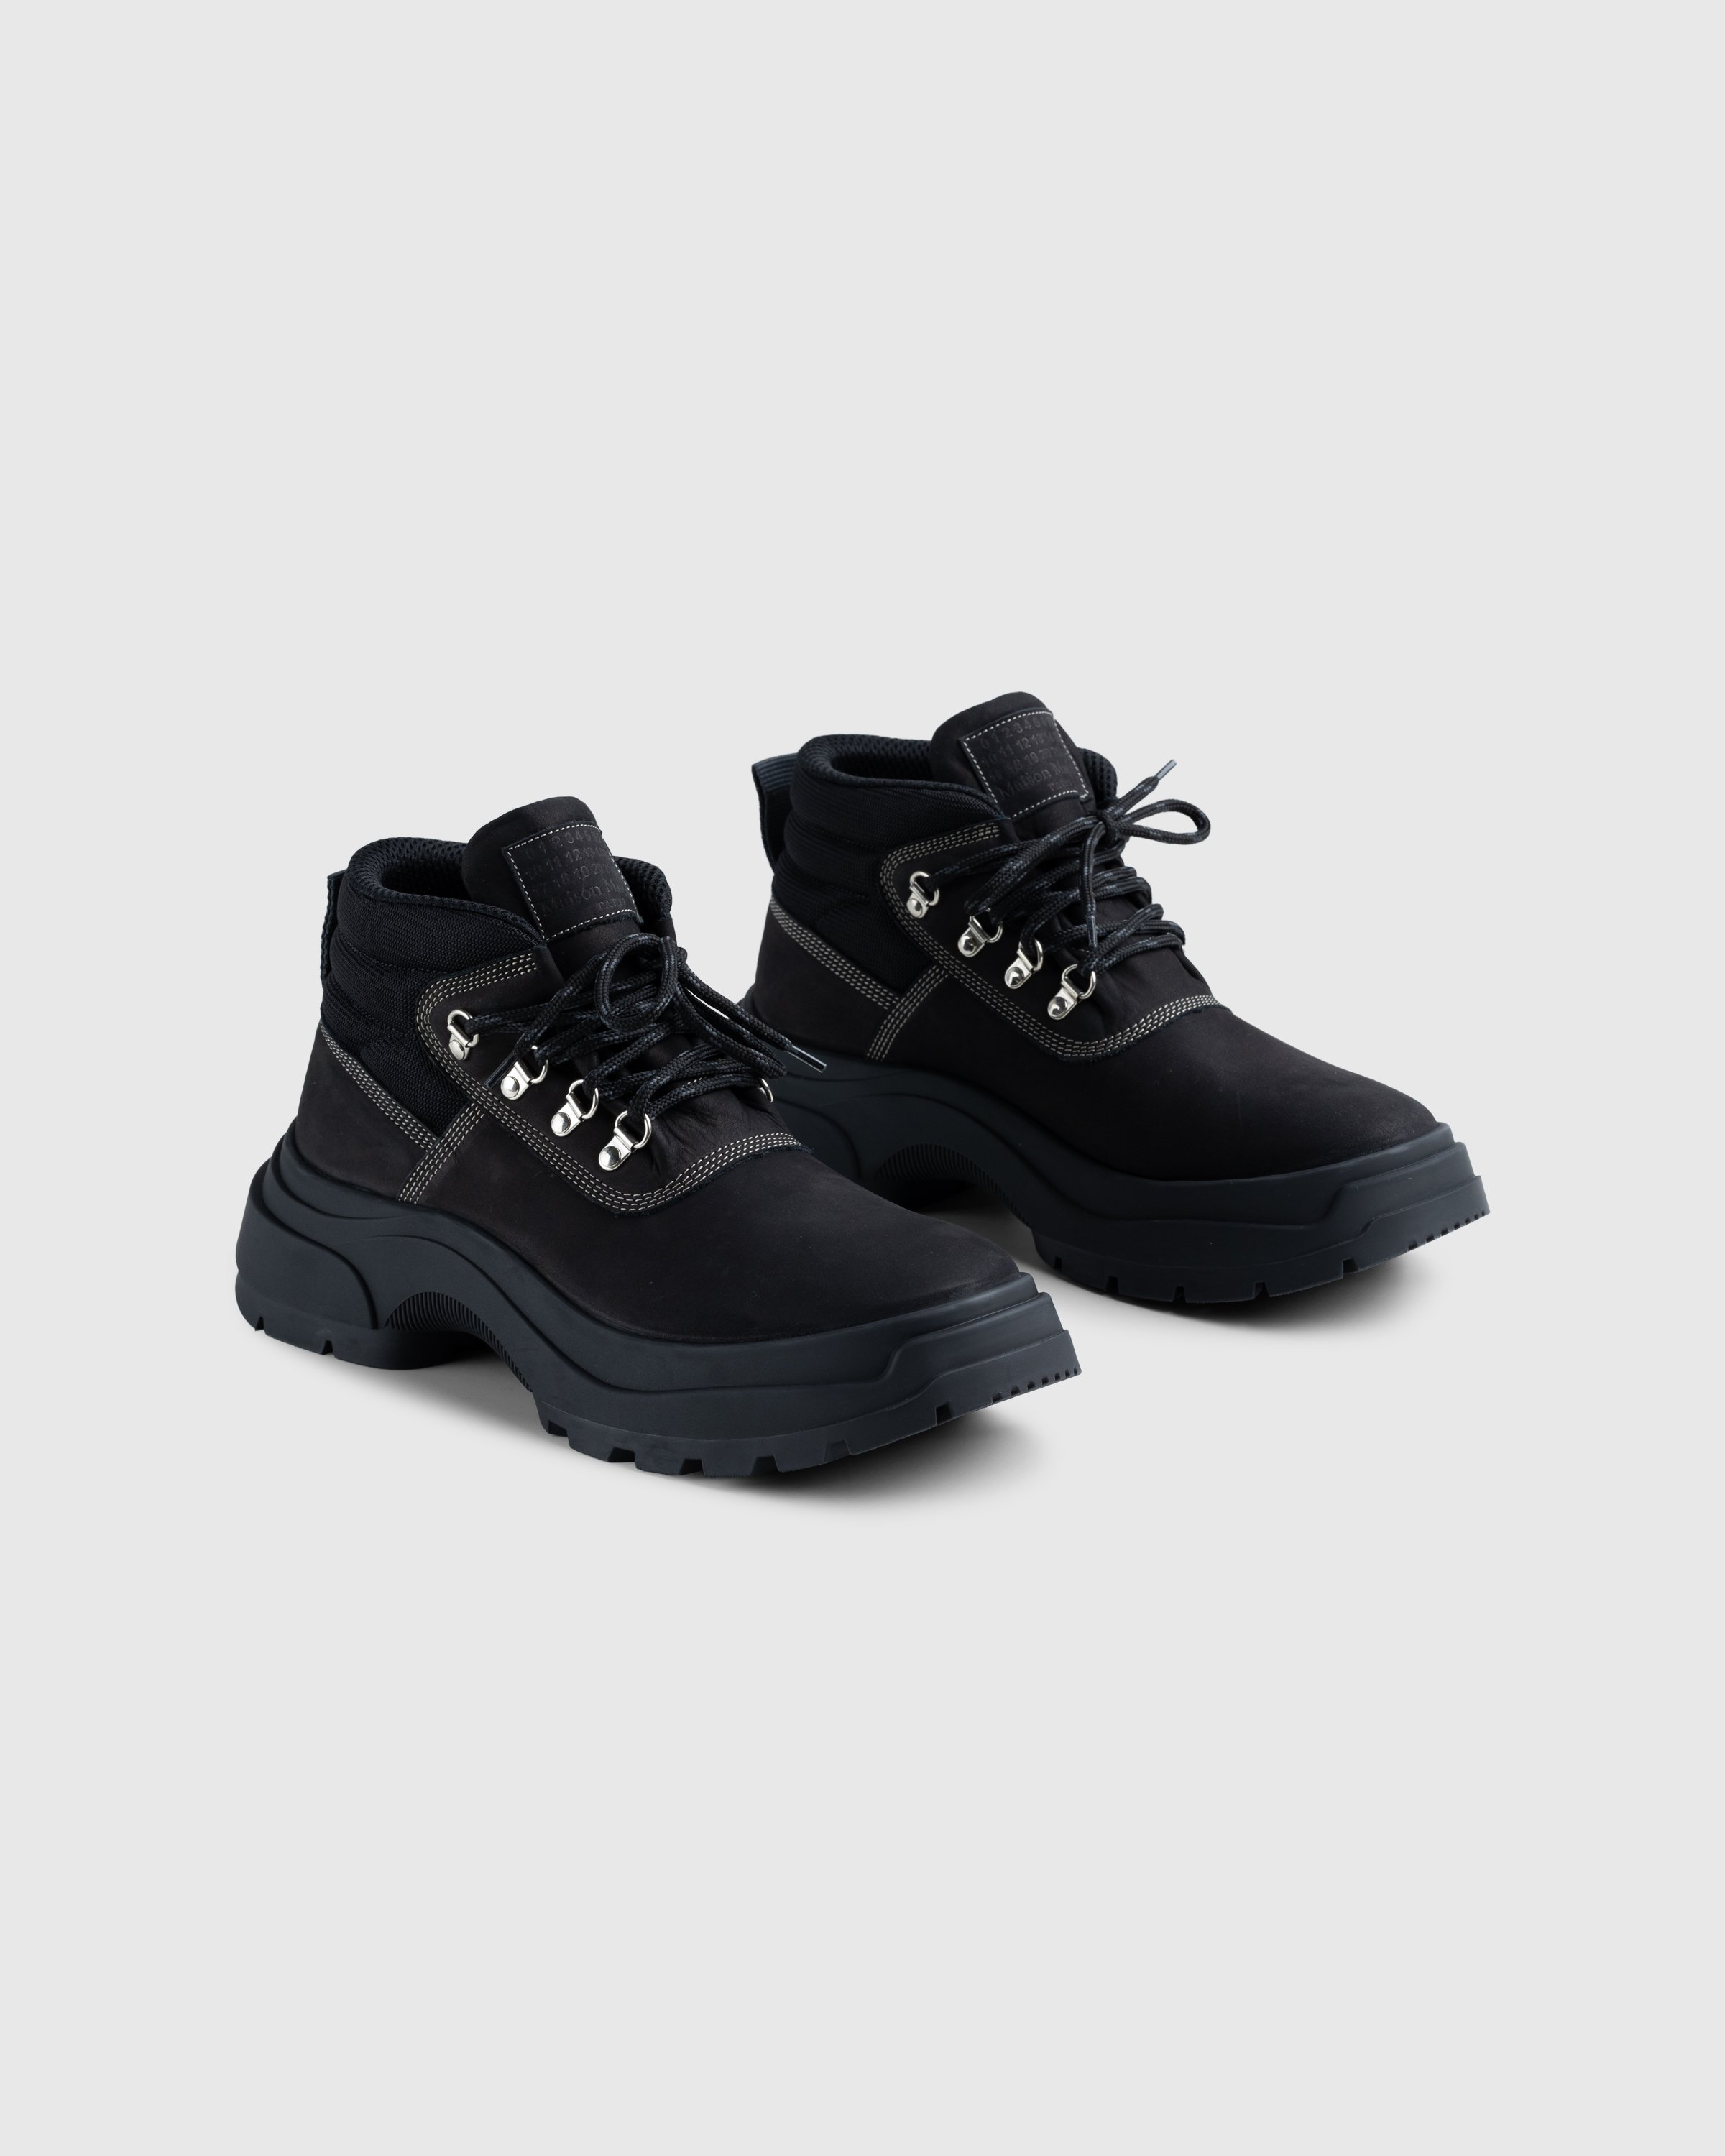 Maison Margiela - Alex Hiking Boot Black/Black - Footwear - Black - Image 3